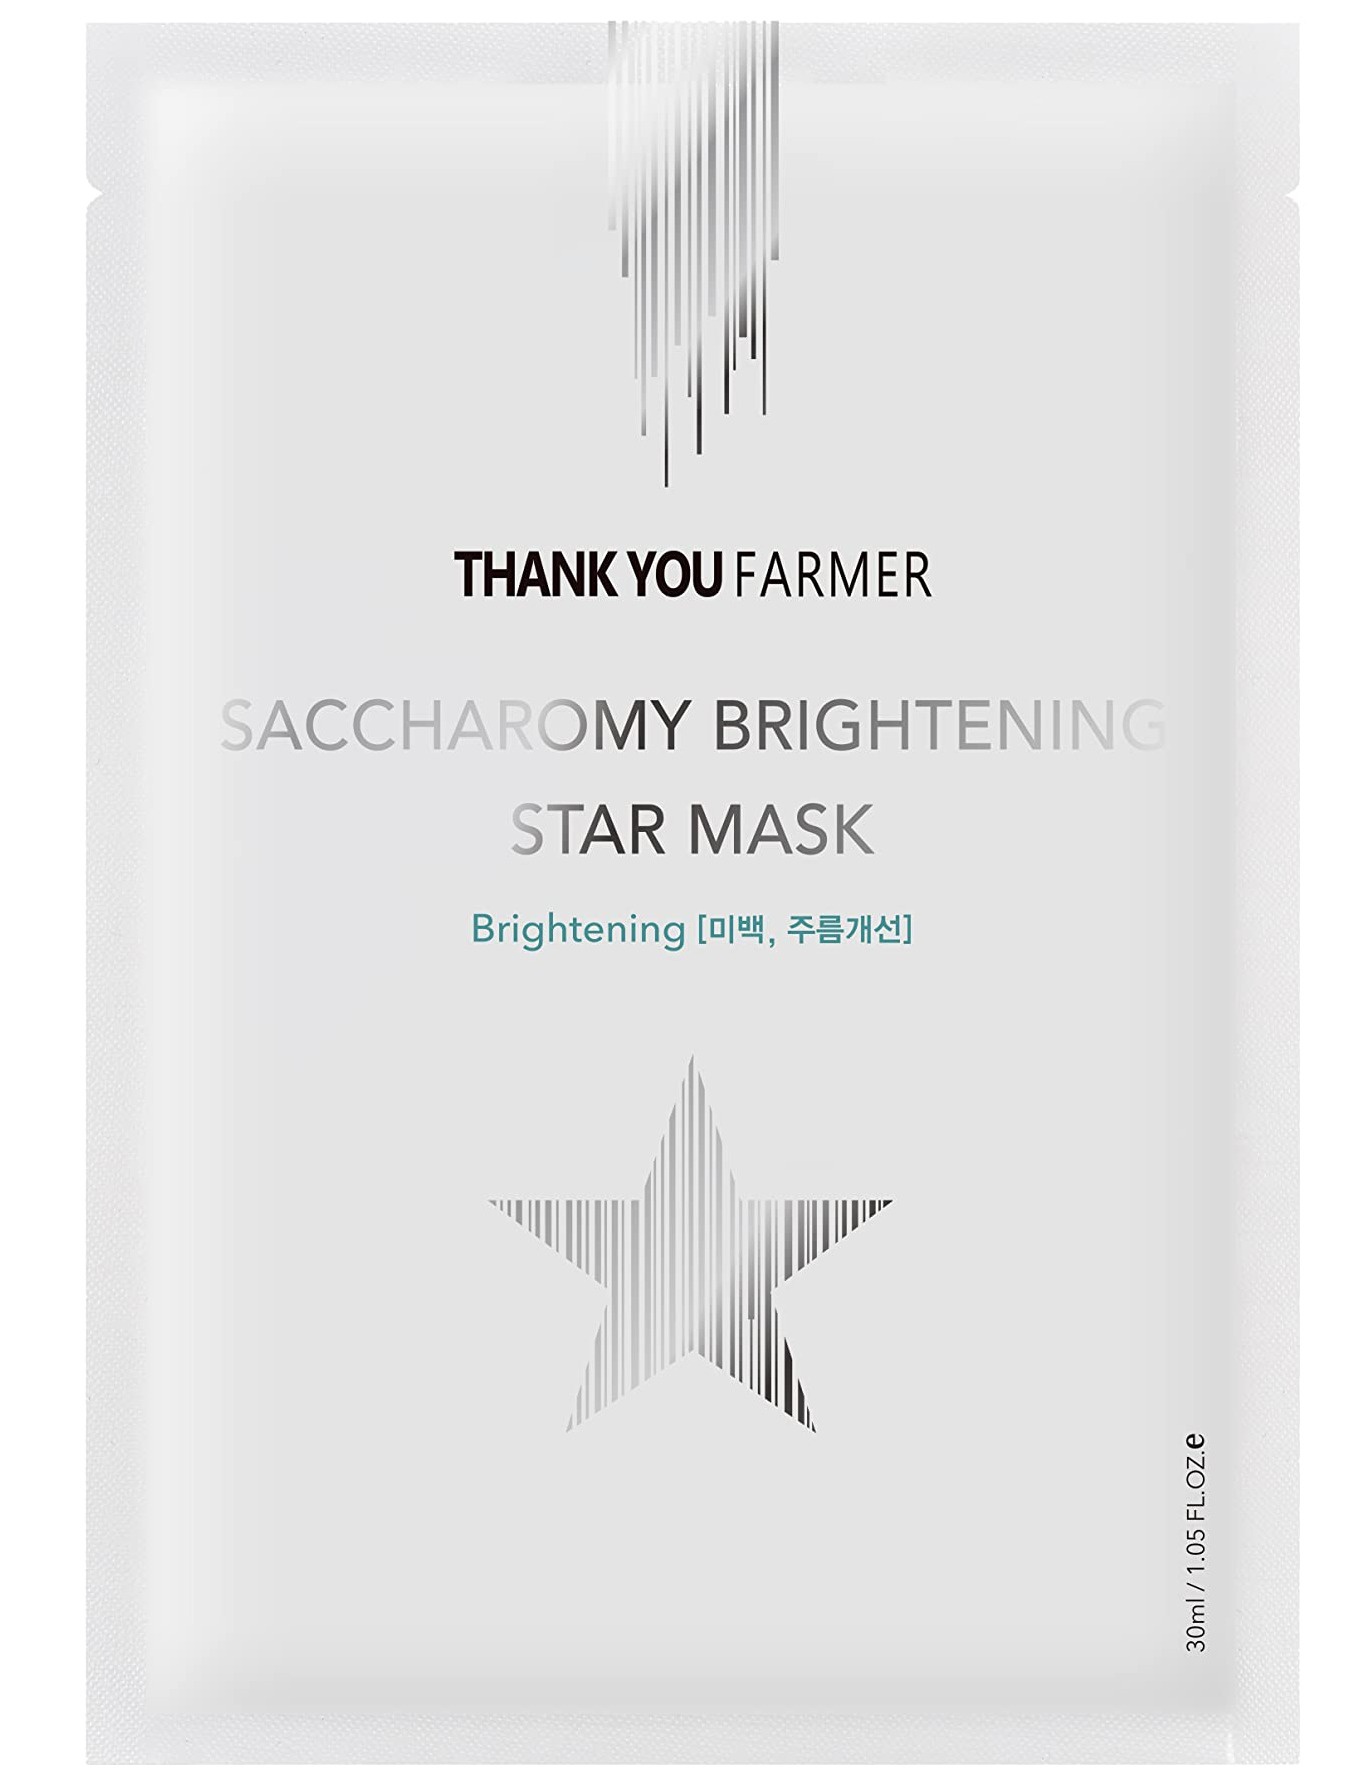 Thank You Farmer Saccharomy Brightening Star Mask